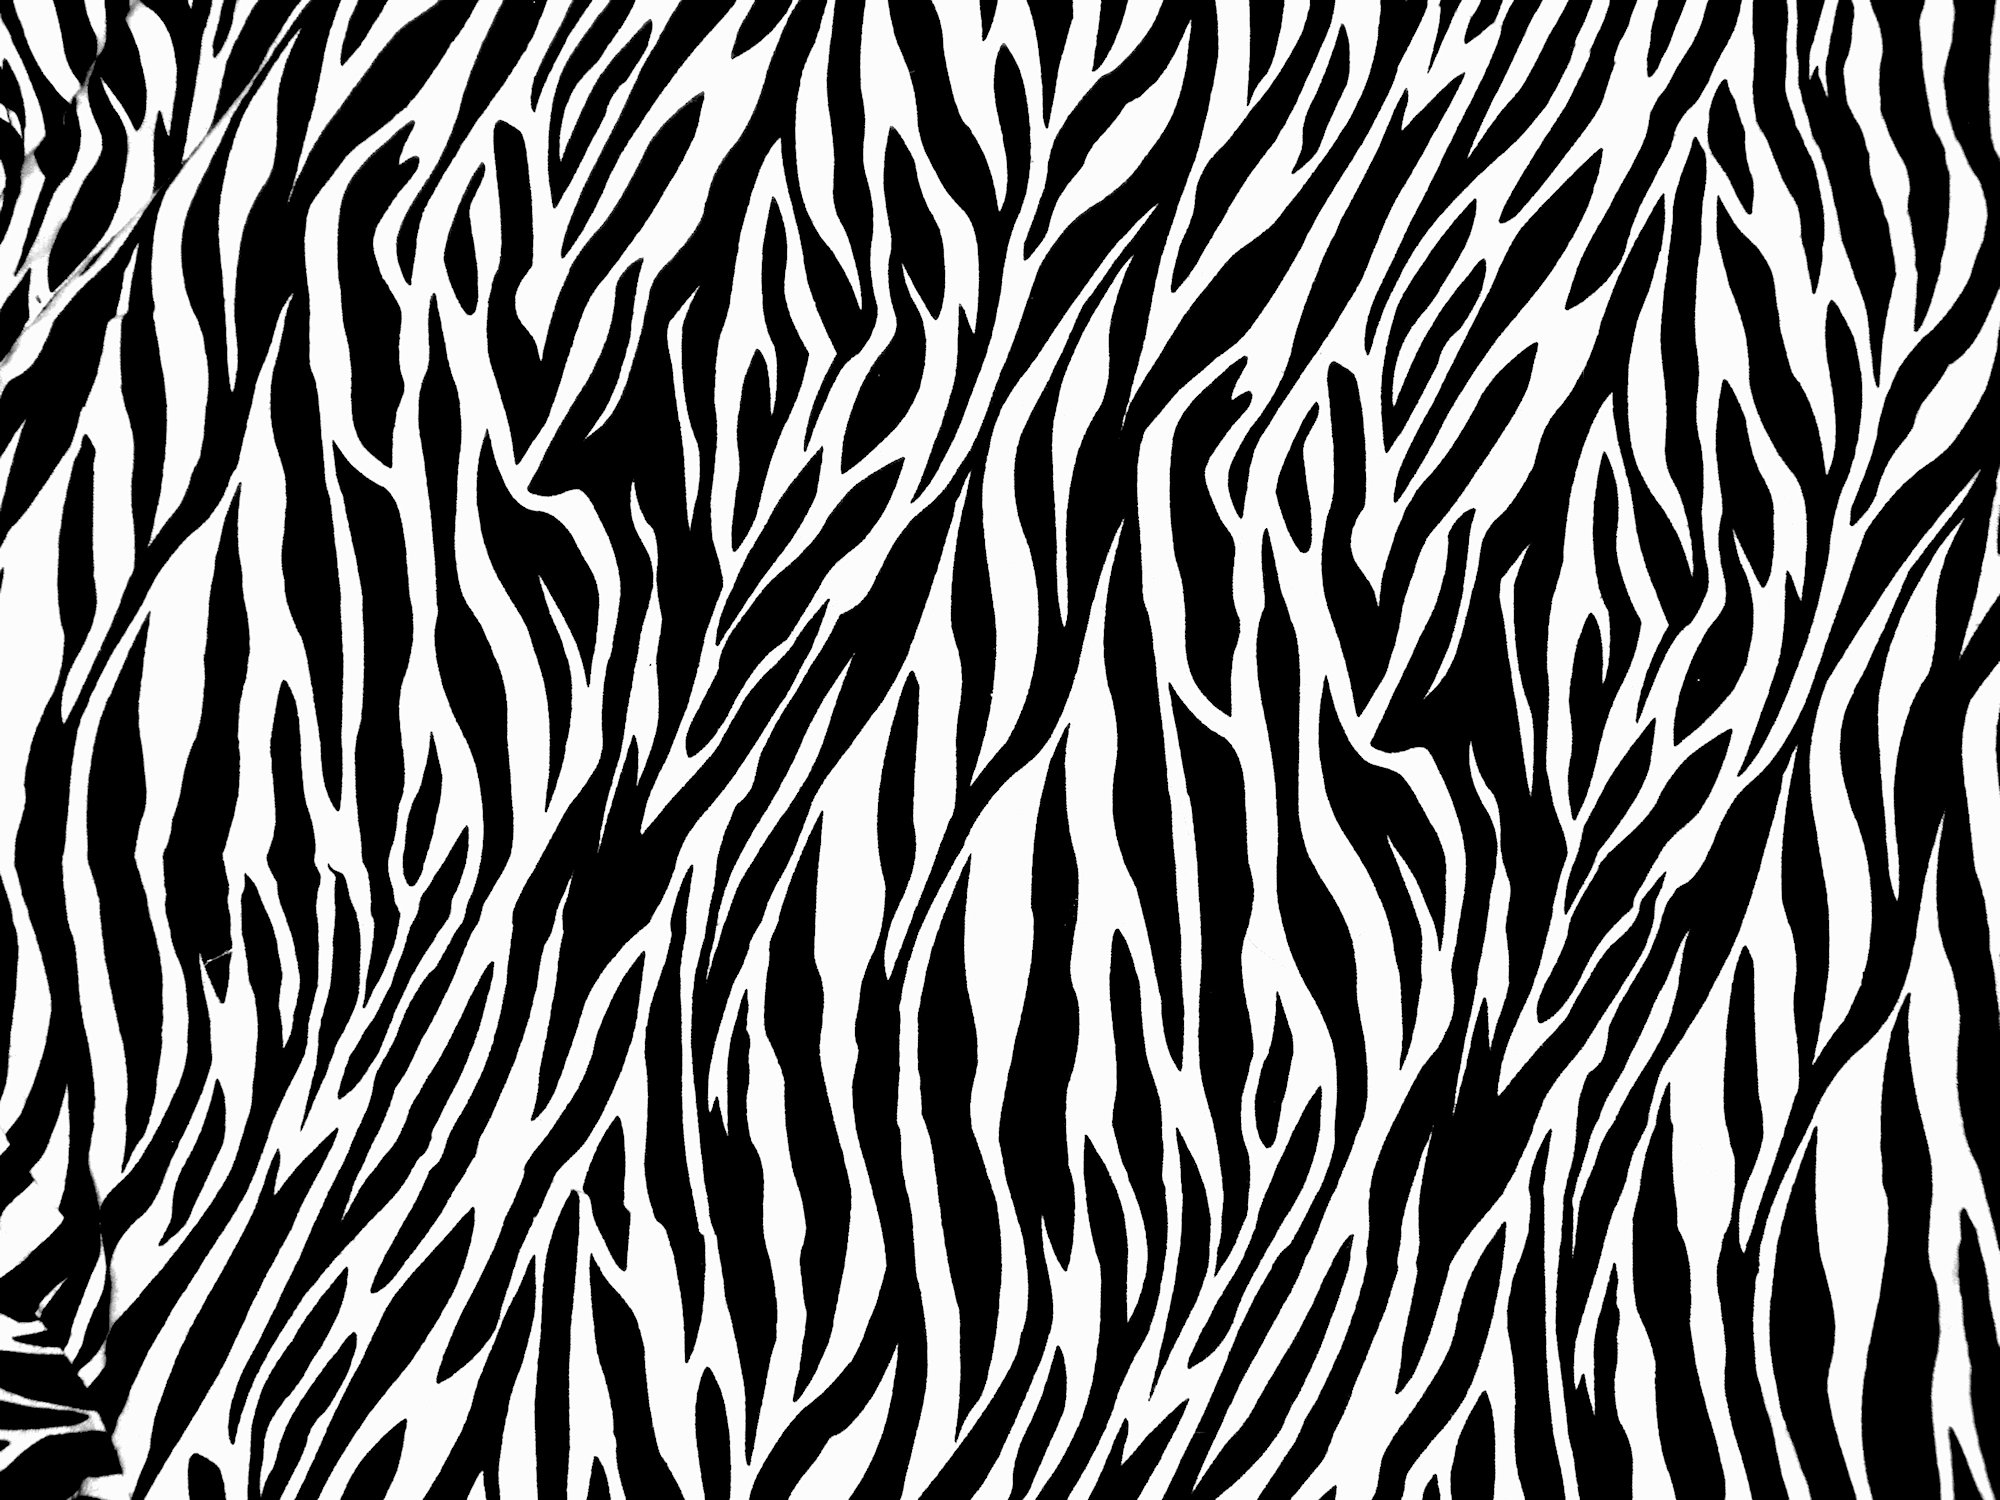 Free Zebra Print Png, Download Free Clip Art, Free Clip Art.